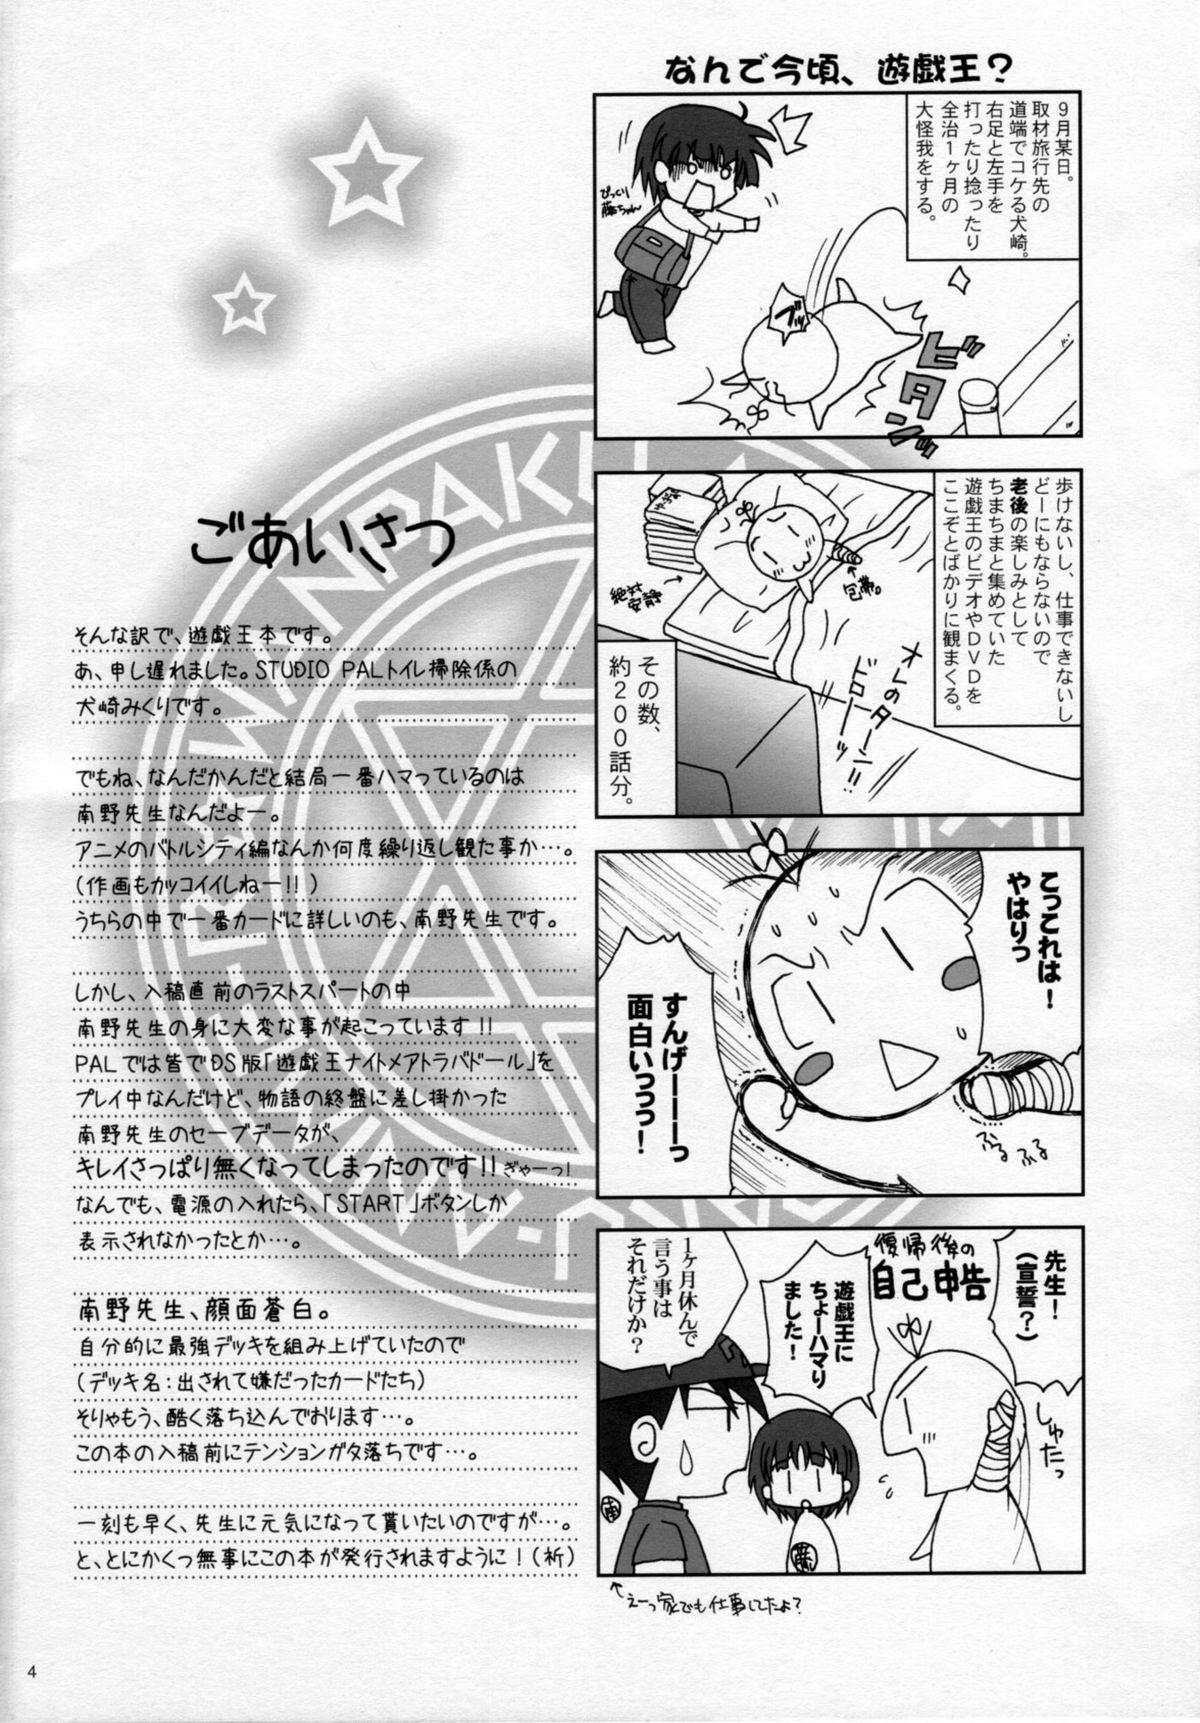 Longhair Wanpaku-Anime R - Yu-gi-oh Free 18 Year Old Porn - Page 3